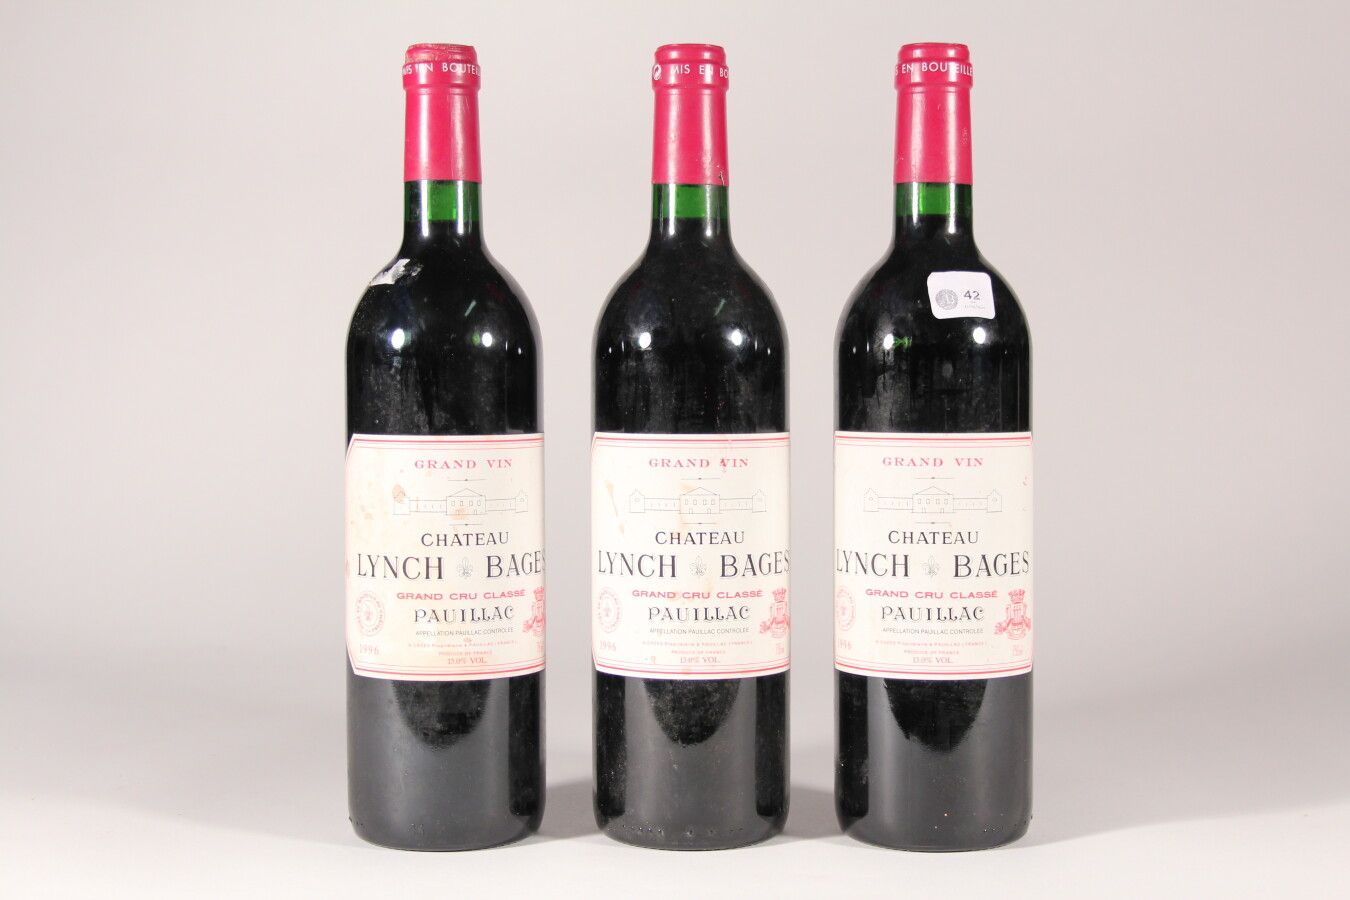 Null 1996年 - 林奇巴格酒庄

波亚克红葡萄酒 - 3瓶